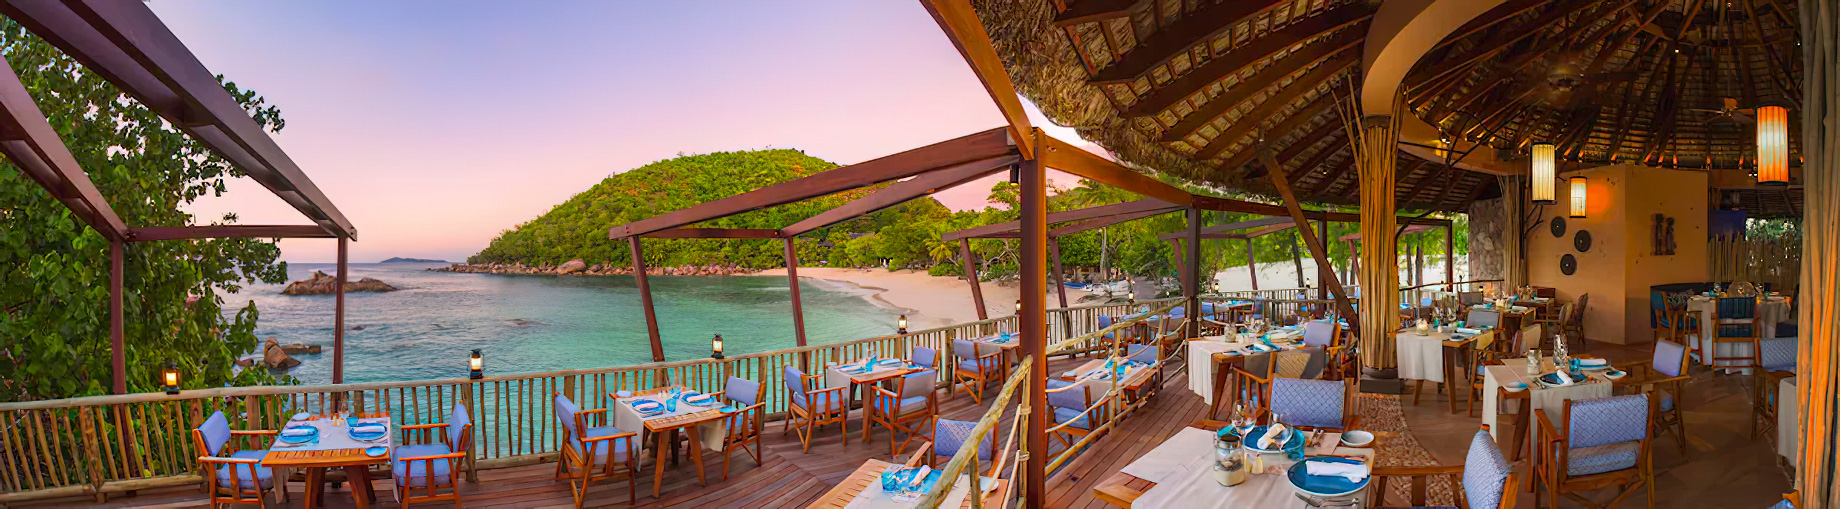 Constance Lemuria Resort – Praslin, Seychelles – The Nest Restaurant Patio